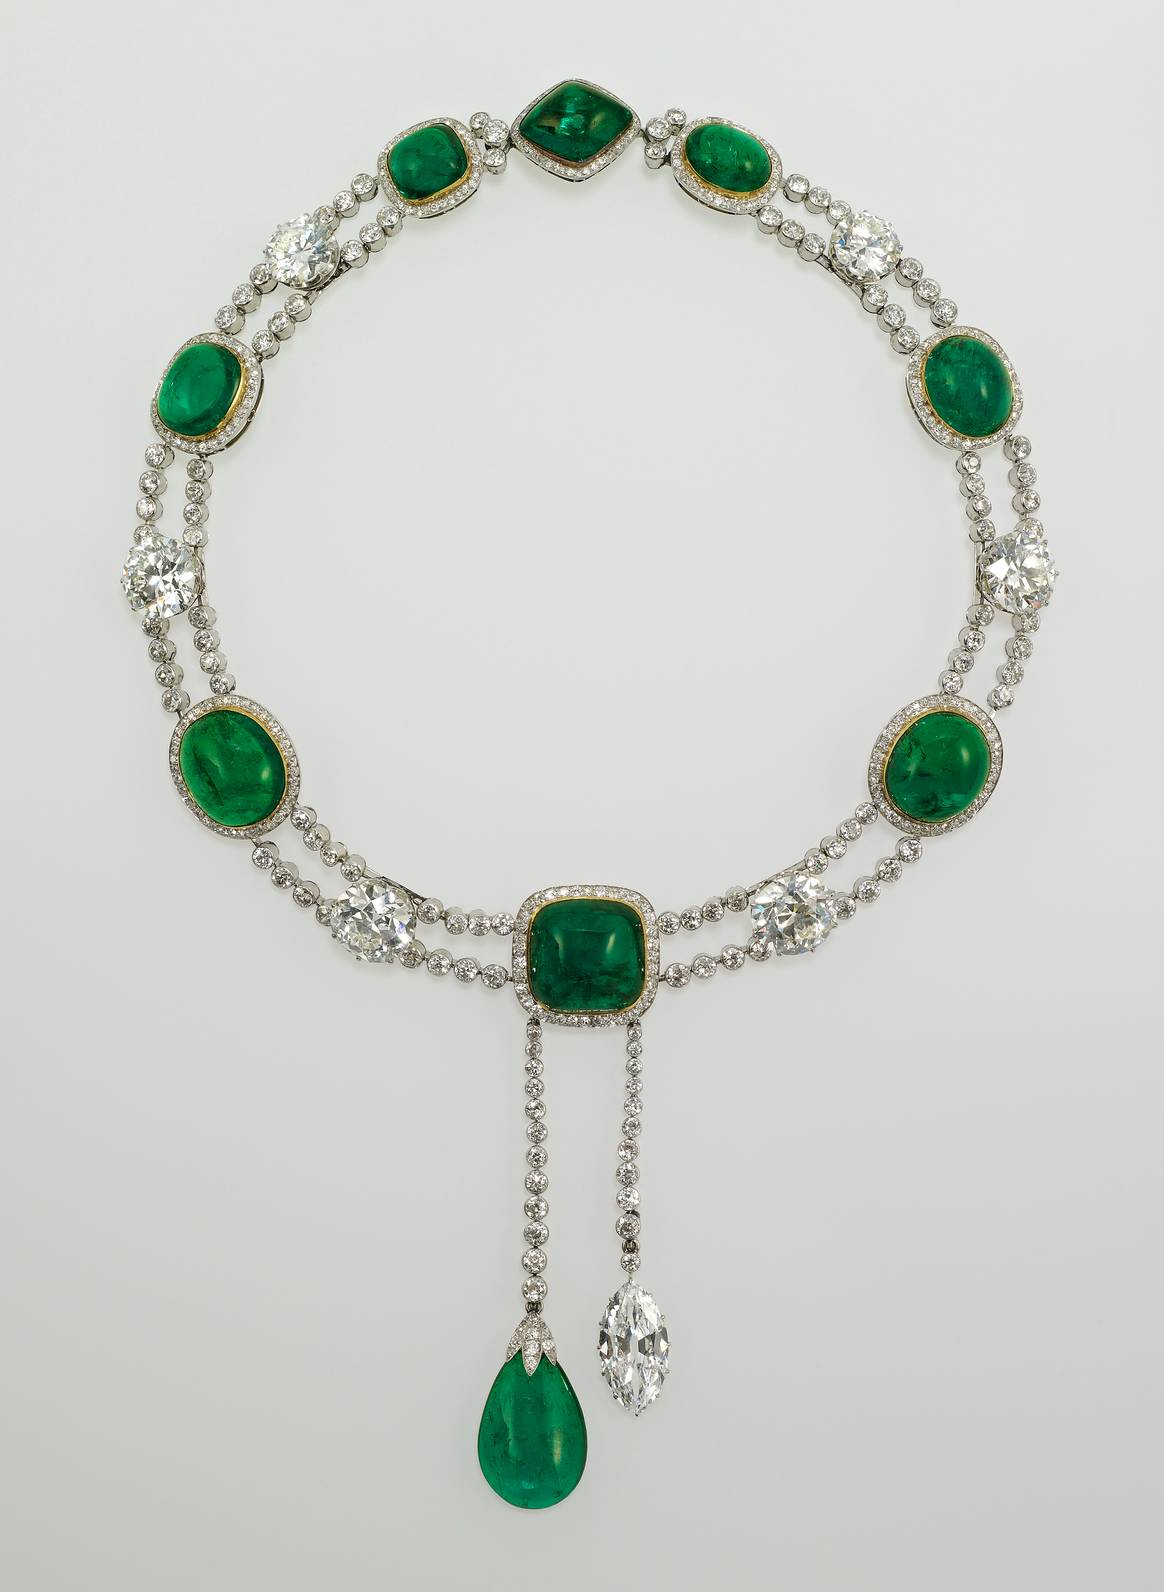 Image: Royal Collection Trust; Garrards, Delhi Durbar Necklace, c.1911